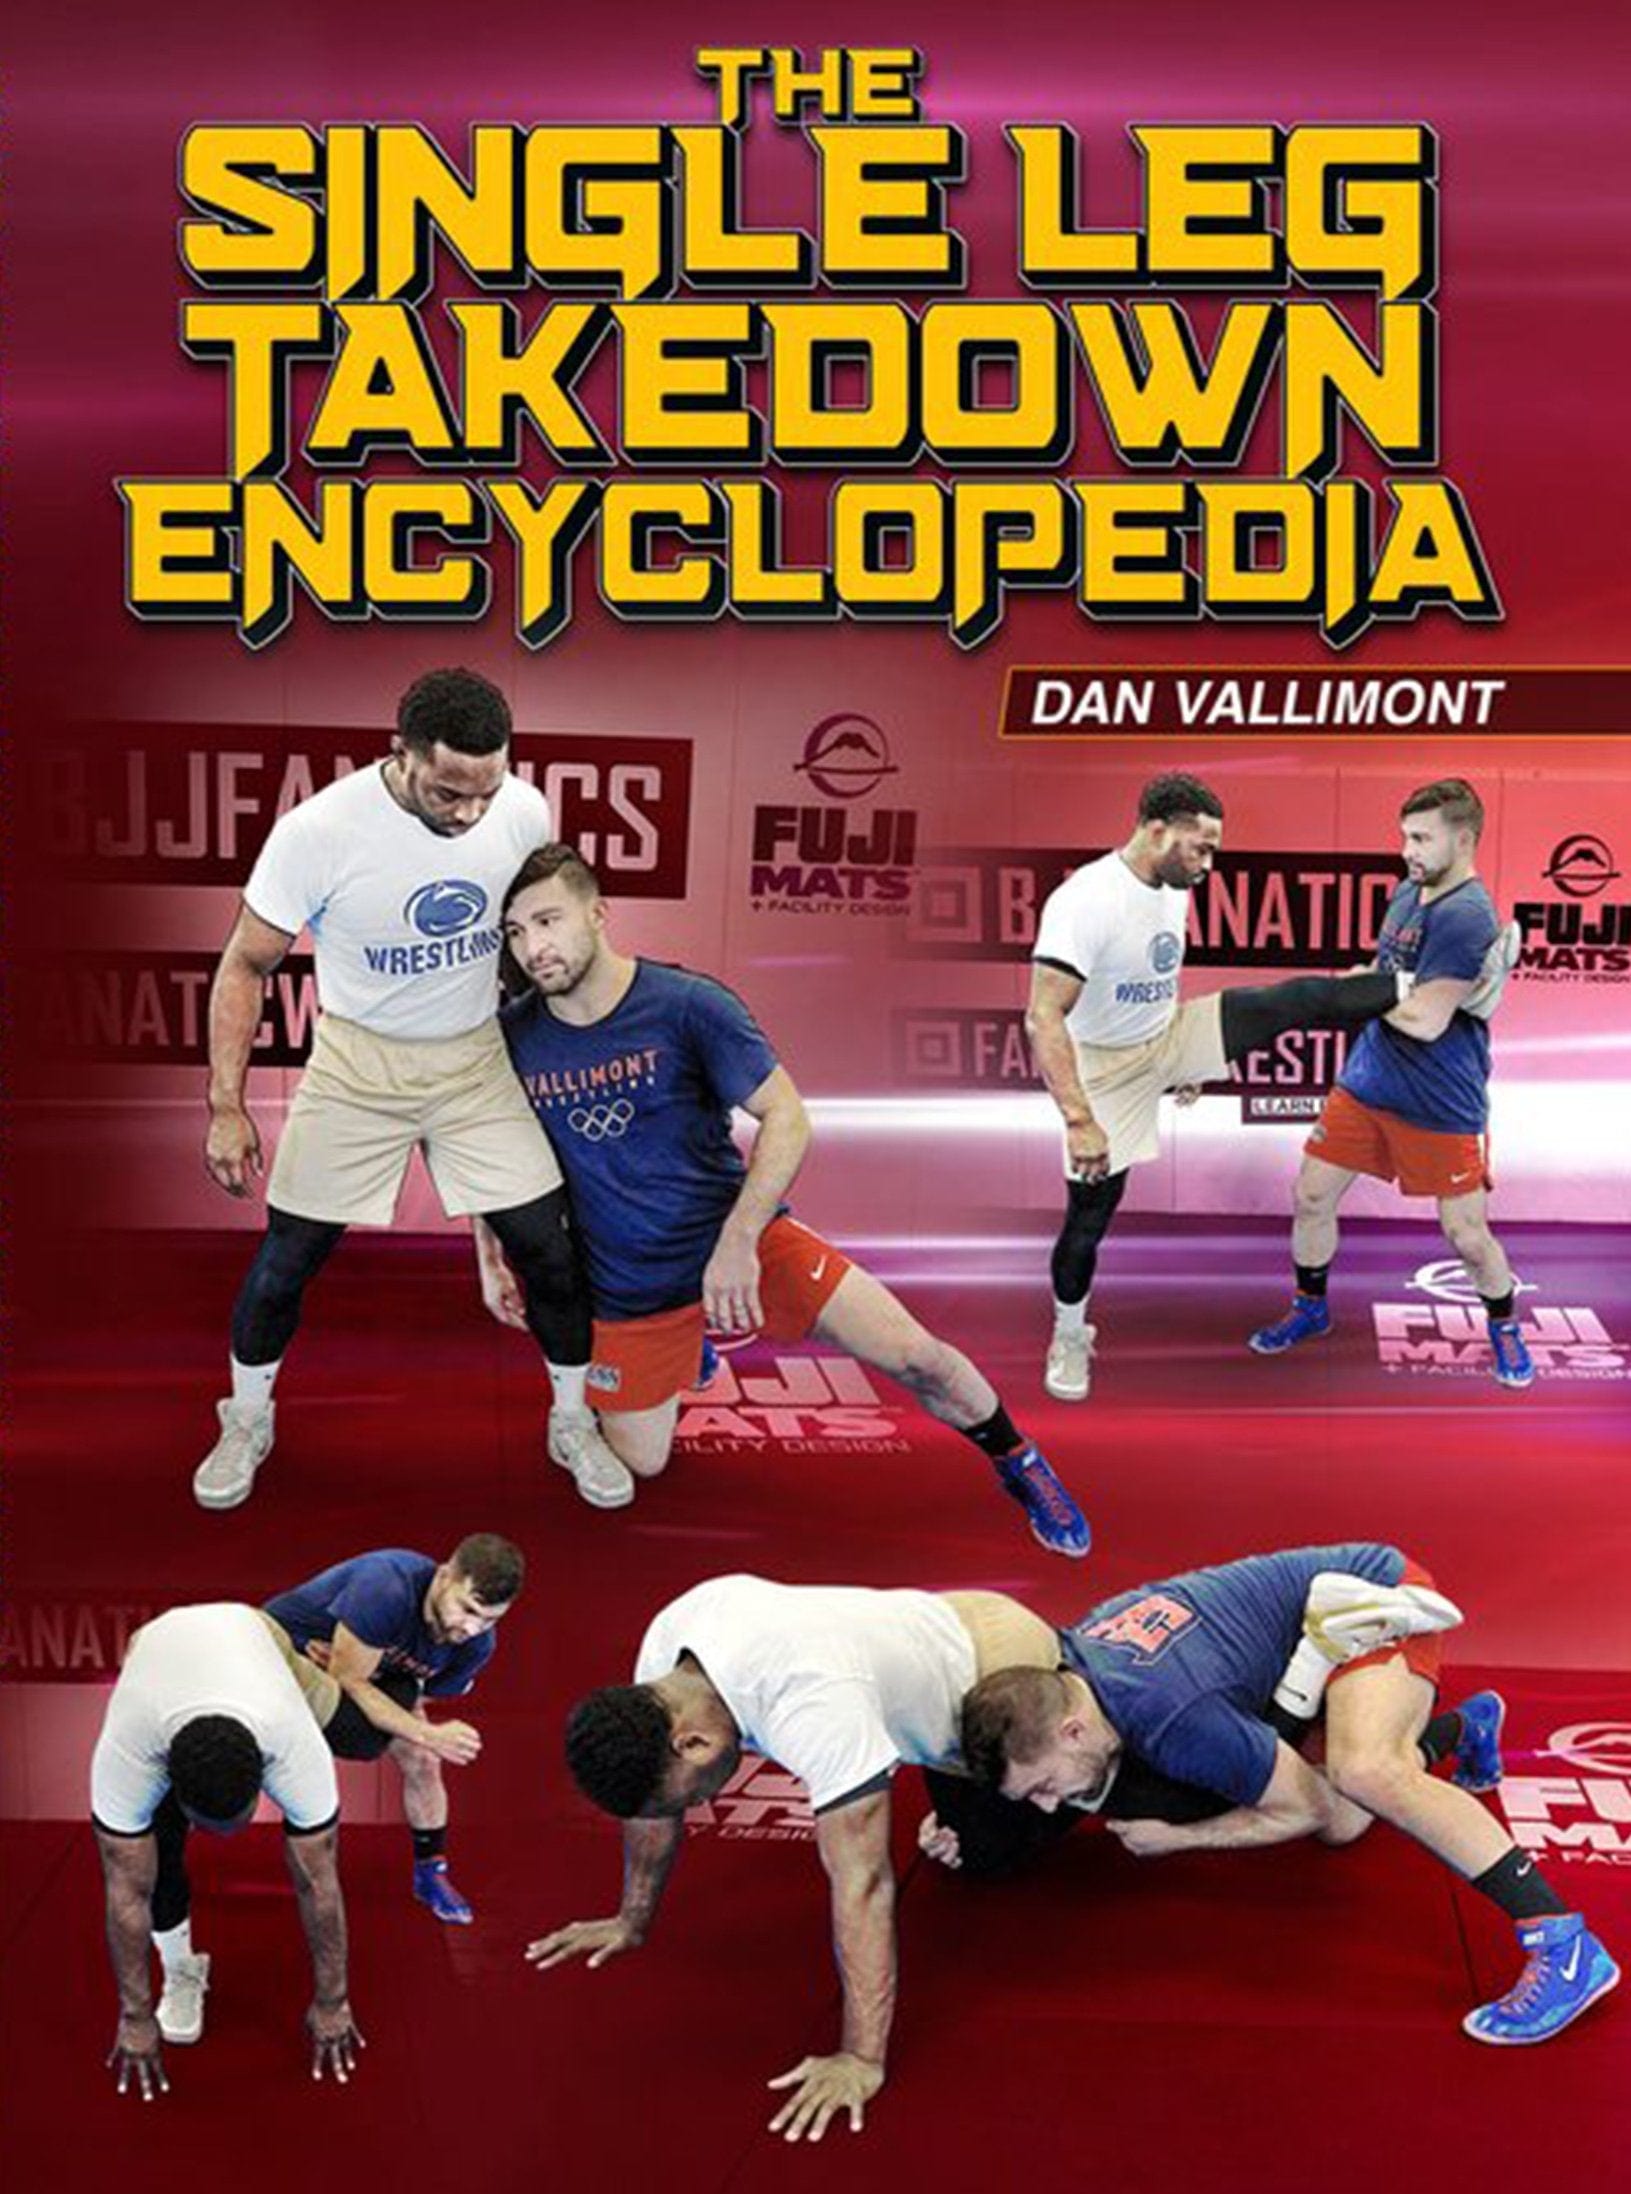 The Single Leg Takedown Encyclopedia by Dan Vallimont - Fanatic Wrestling